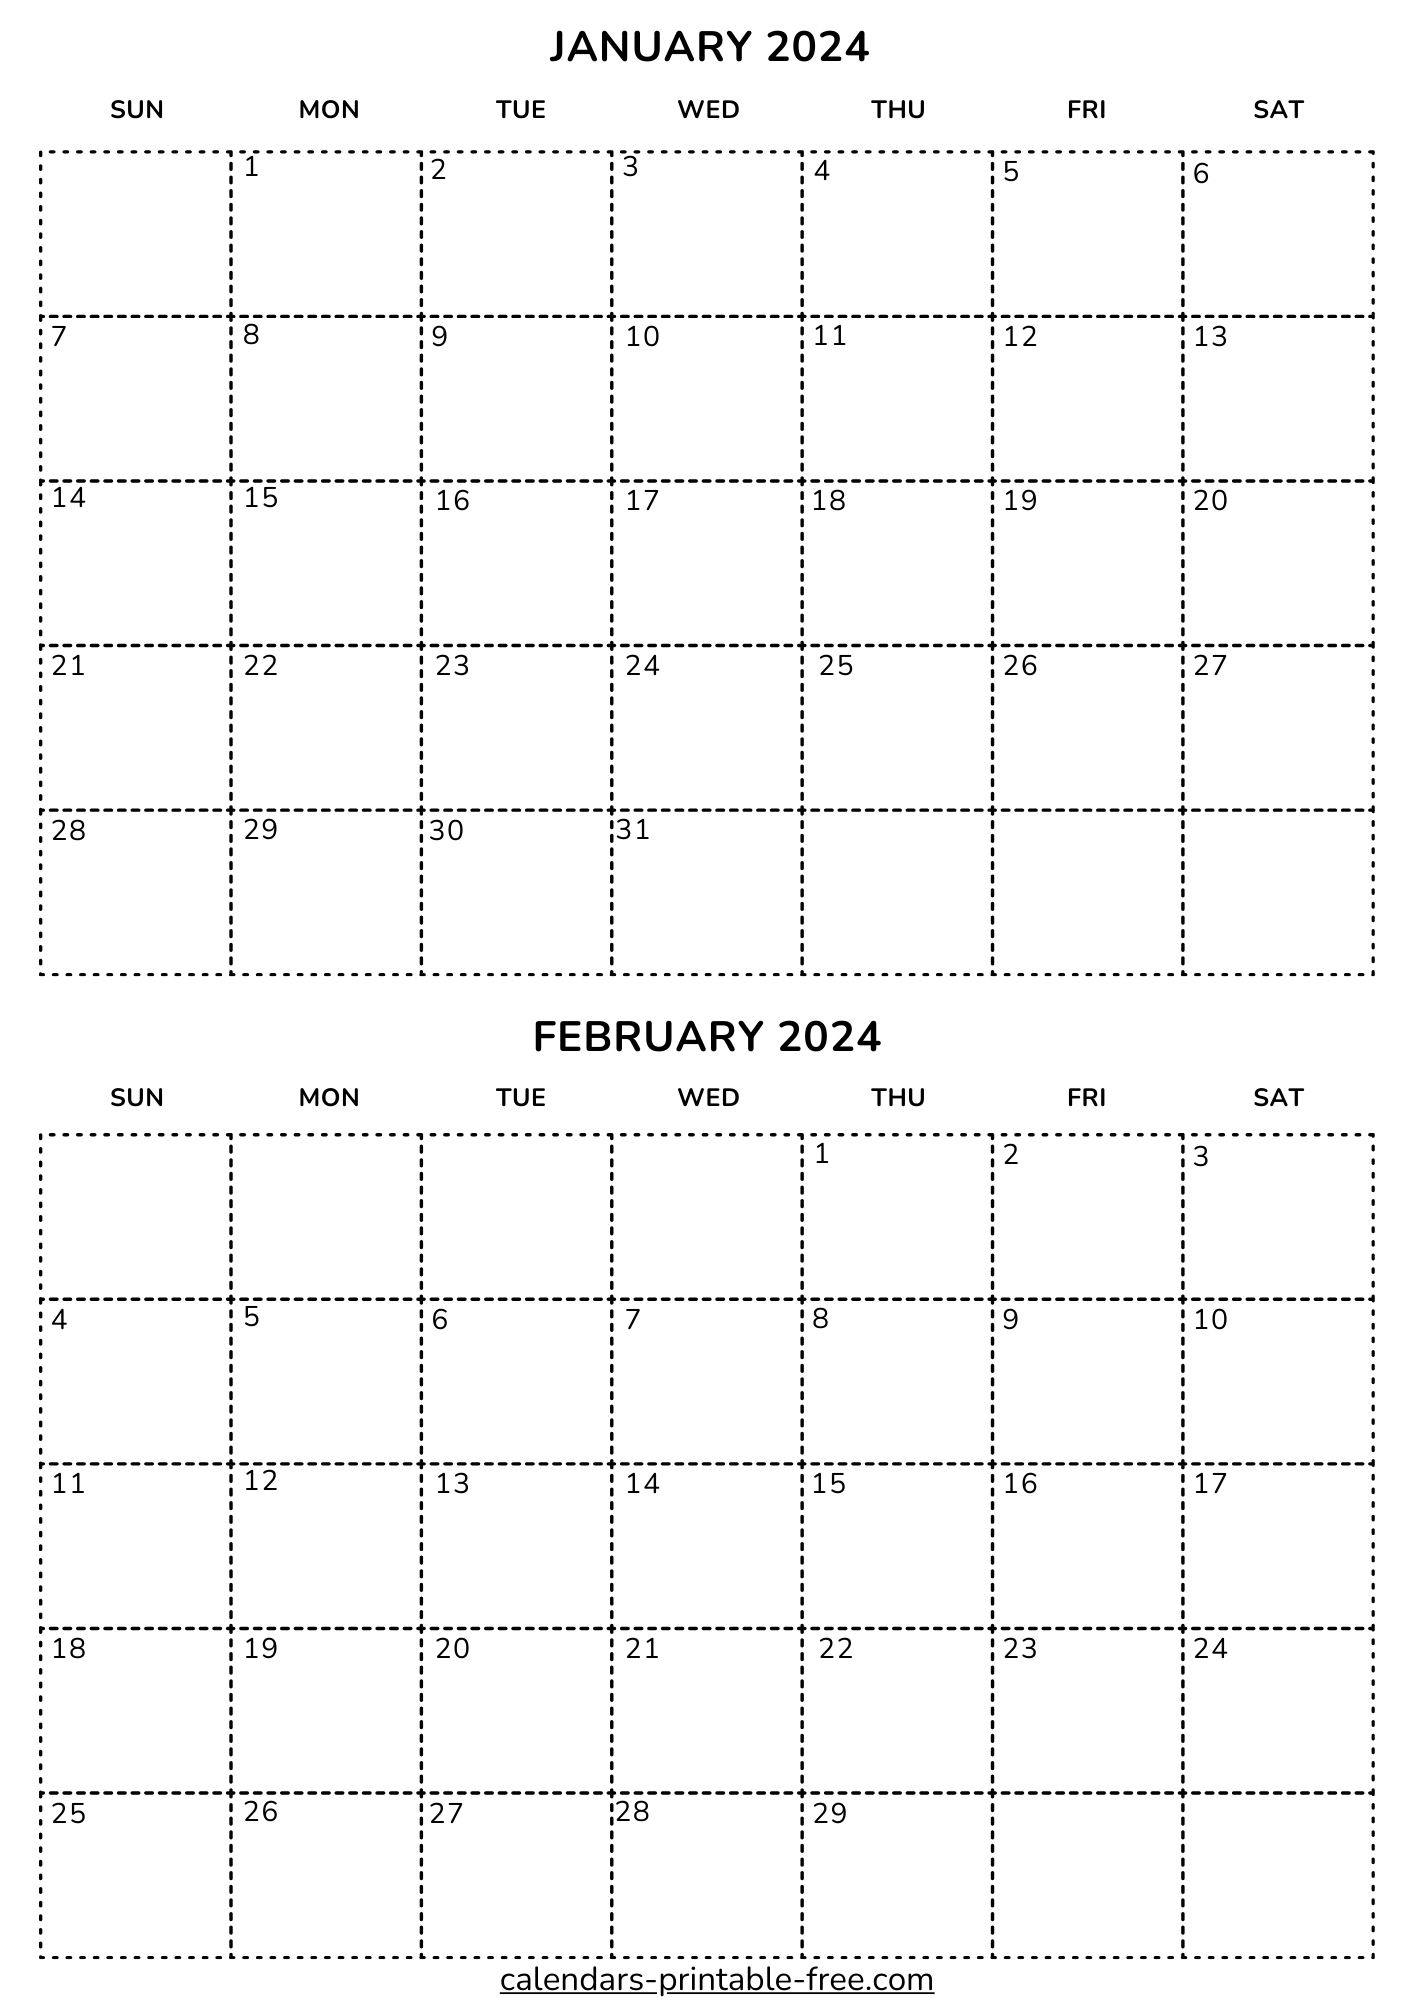 January and February 2024 Calendar Printable Free